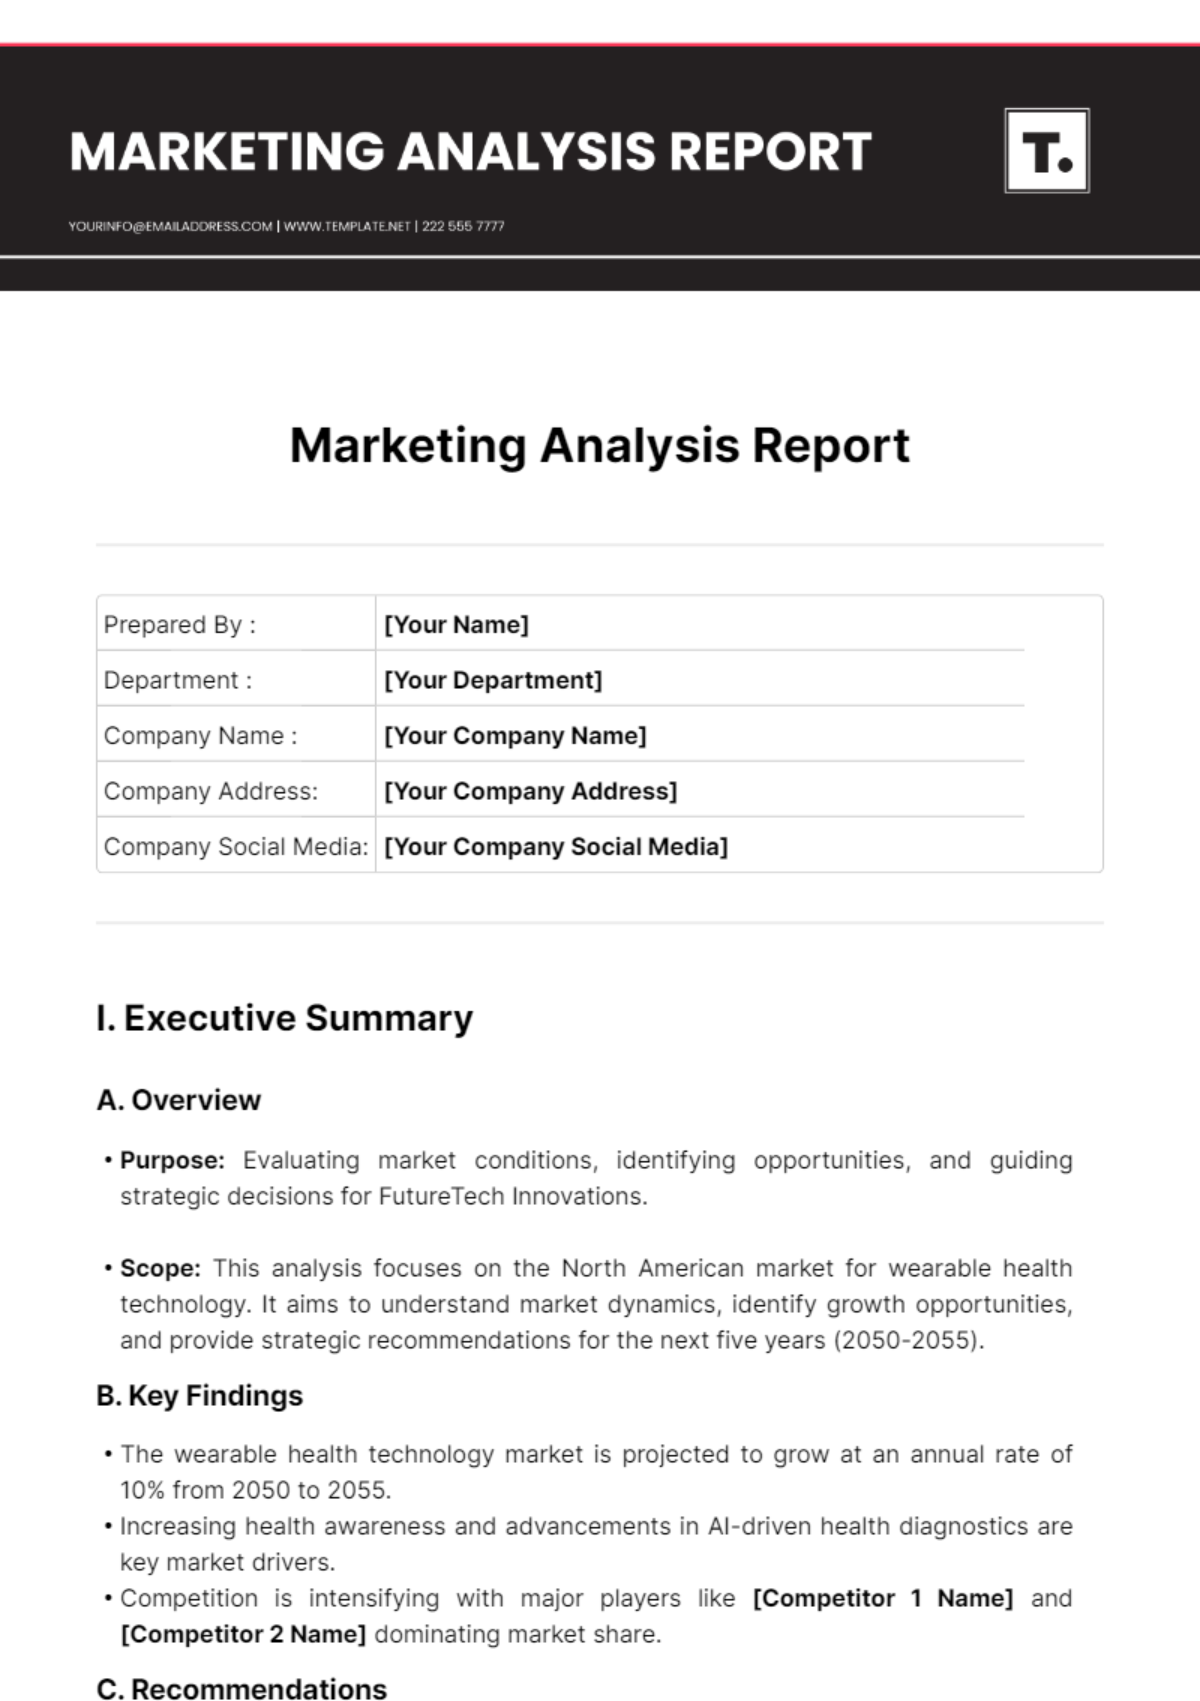 Free Marketing Analysis Report Template